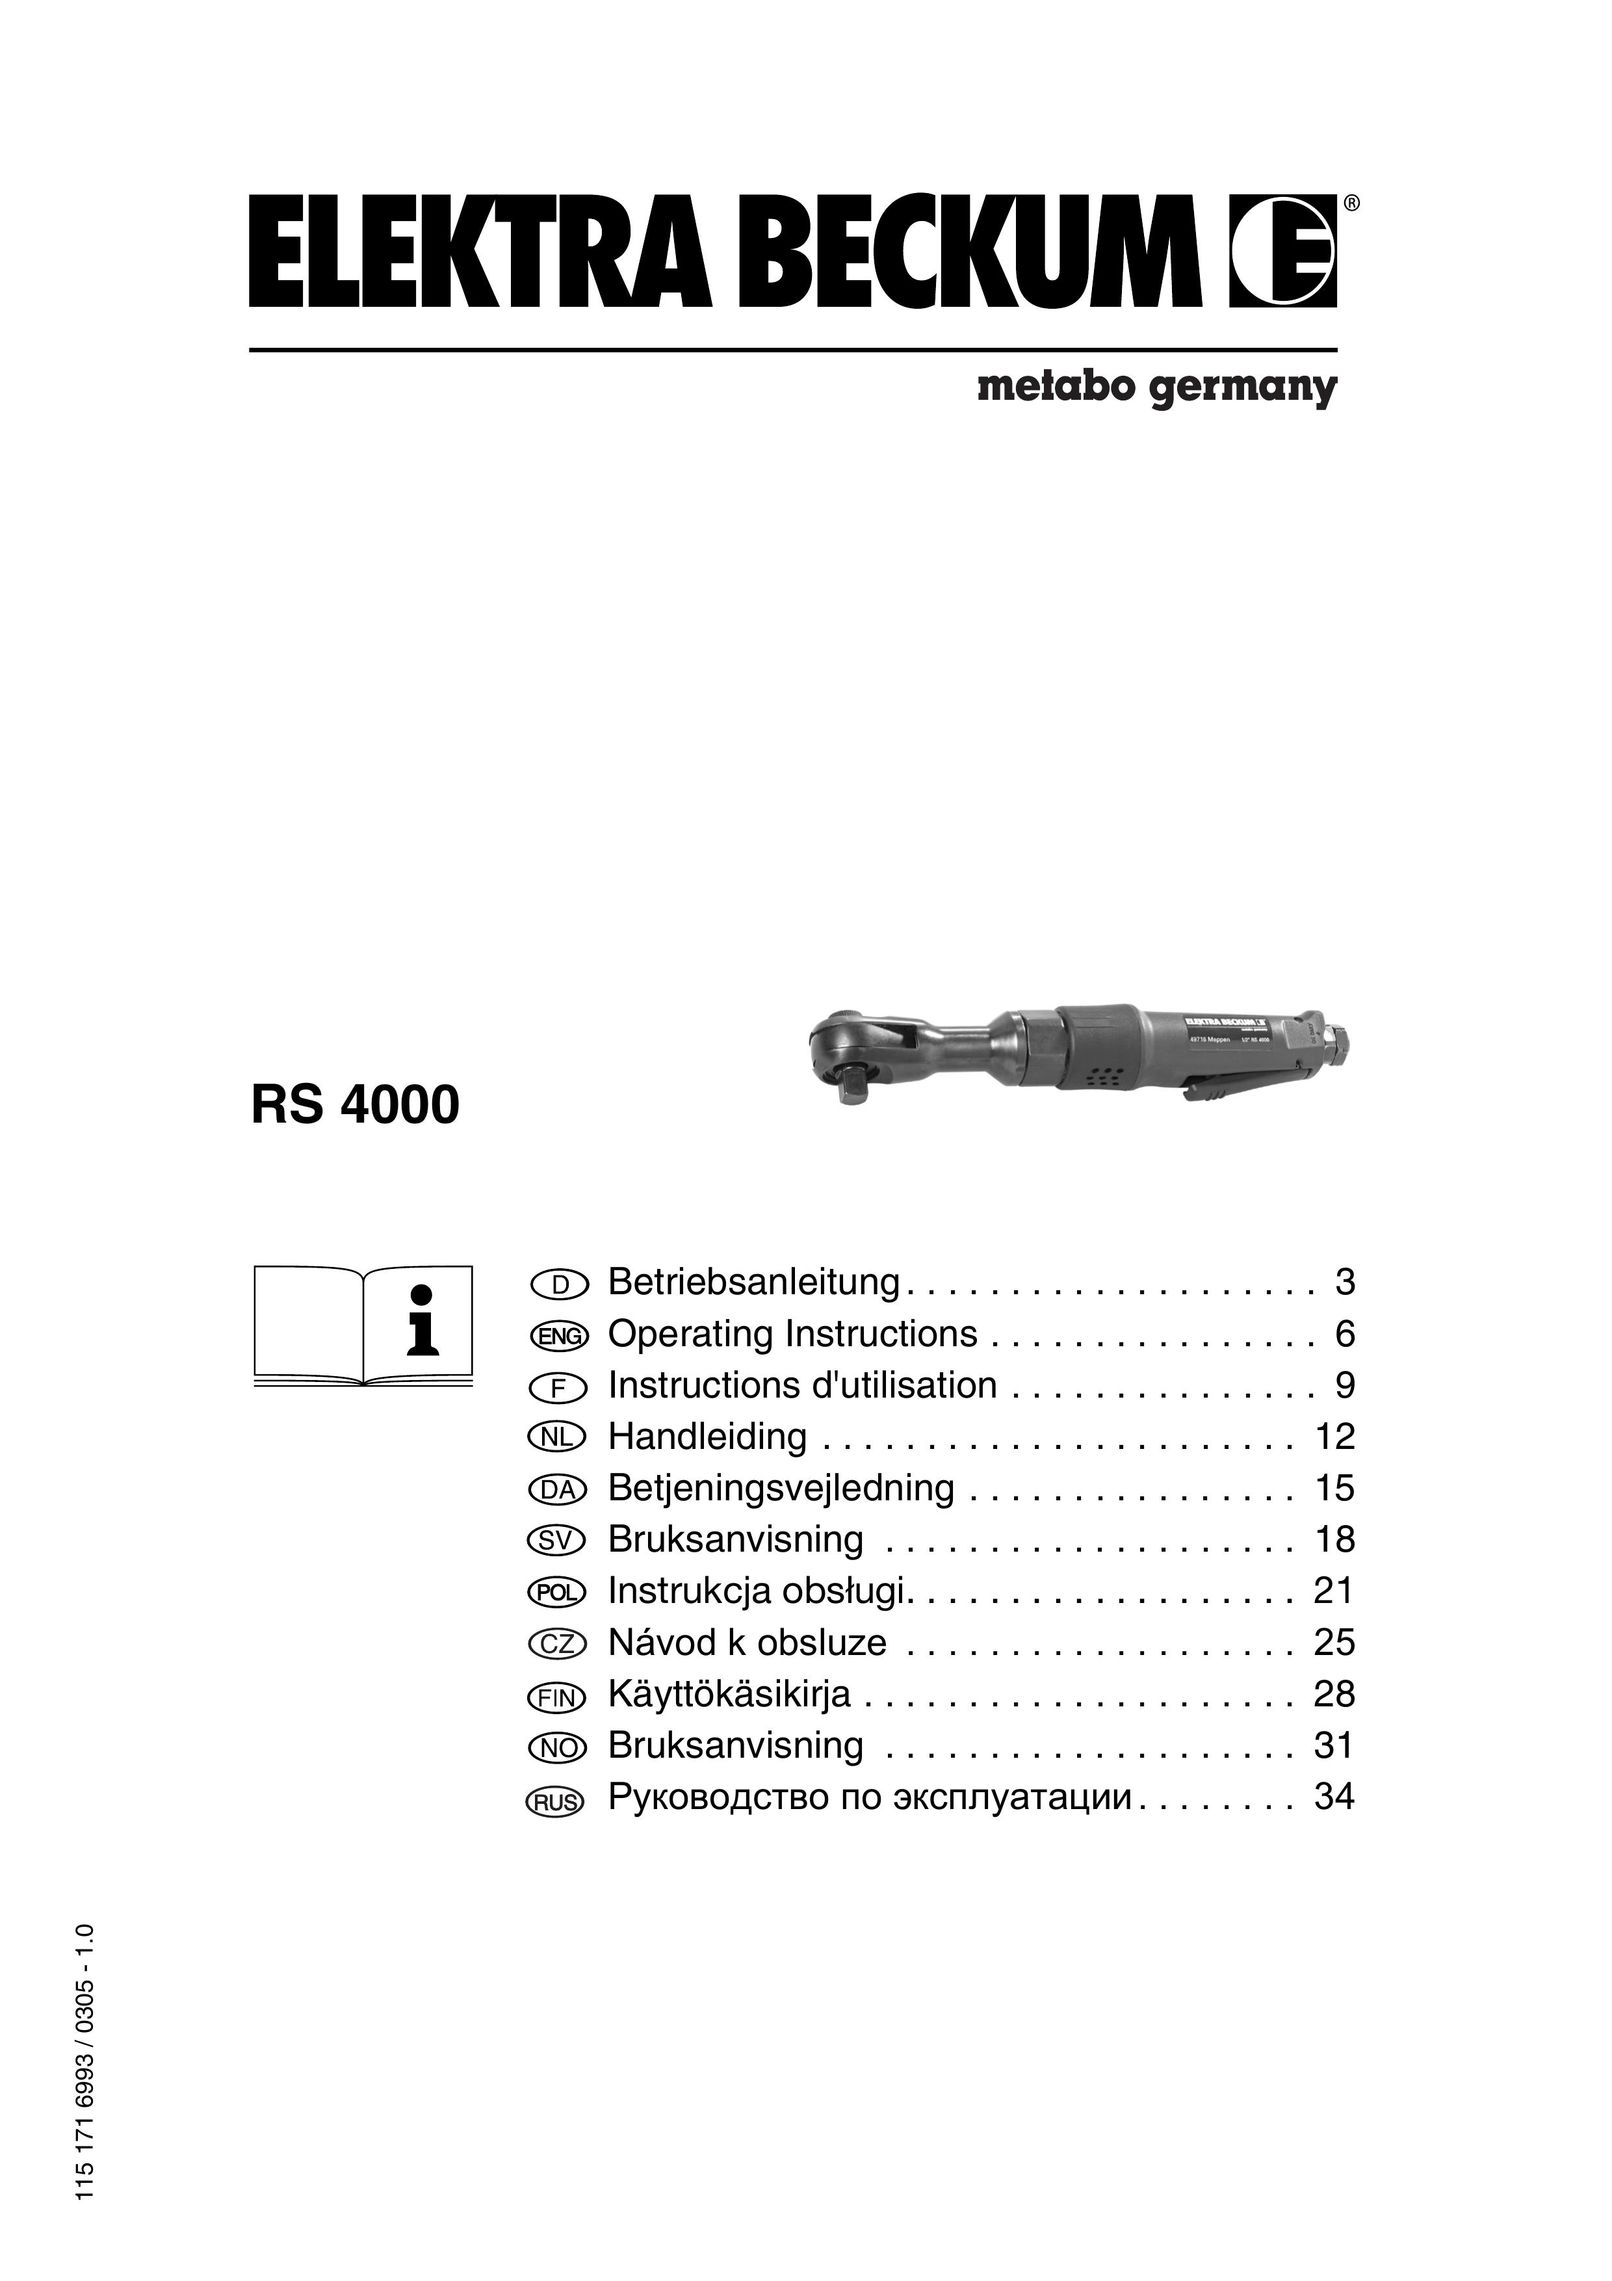 Elektra Beckum RS 4000 Air Compressor User Manual